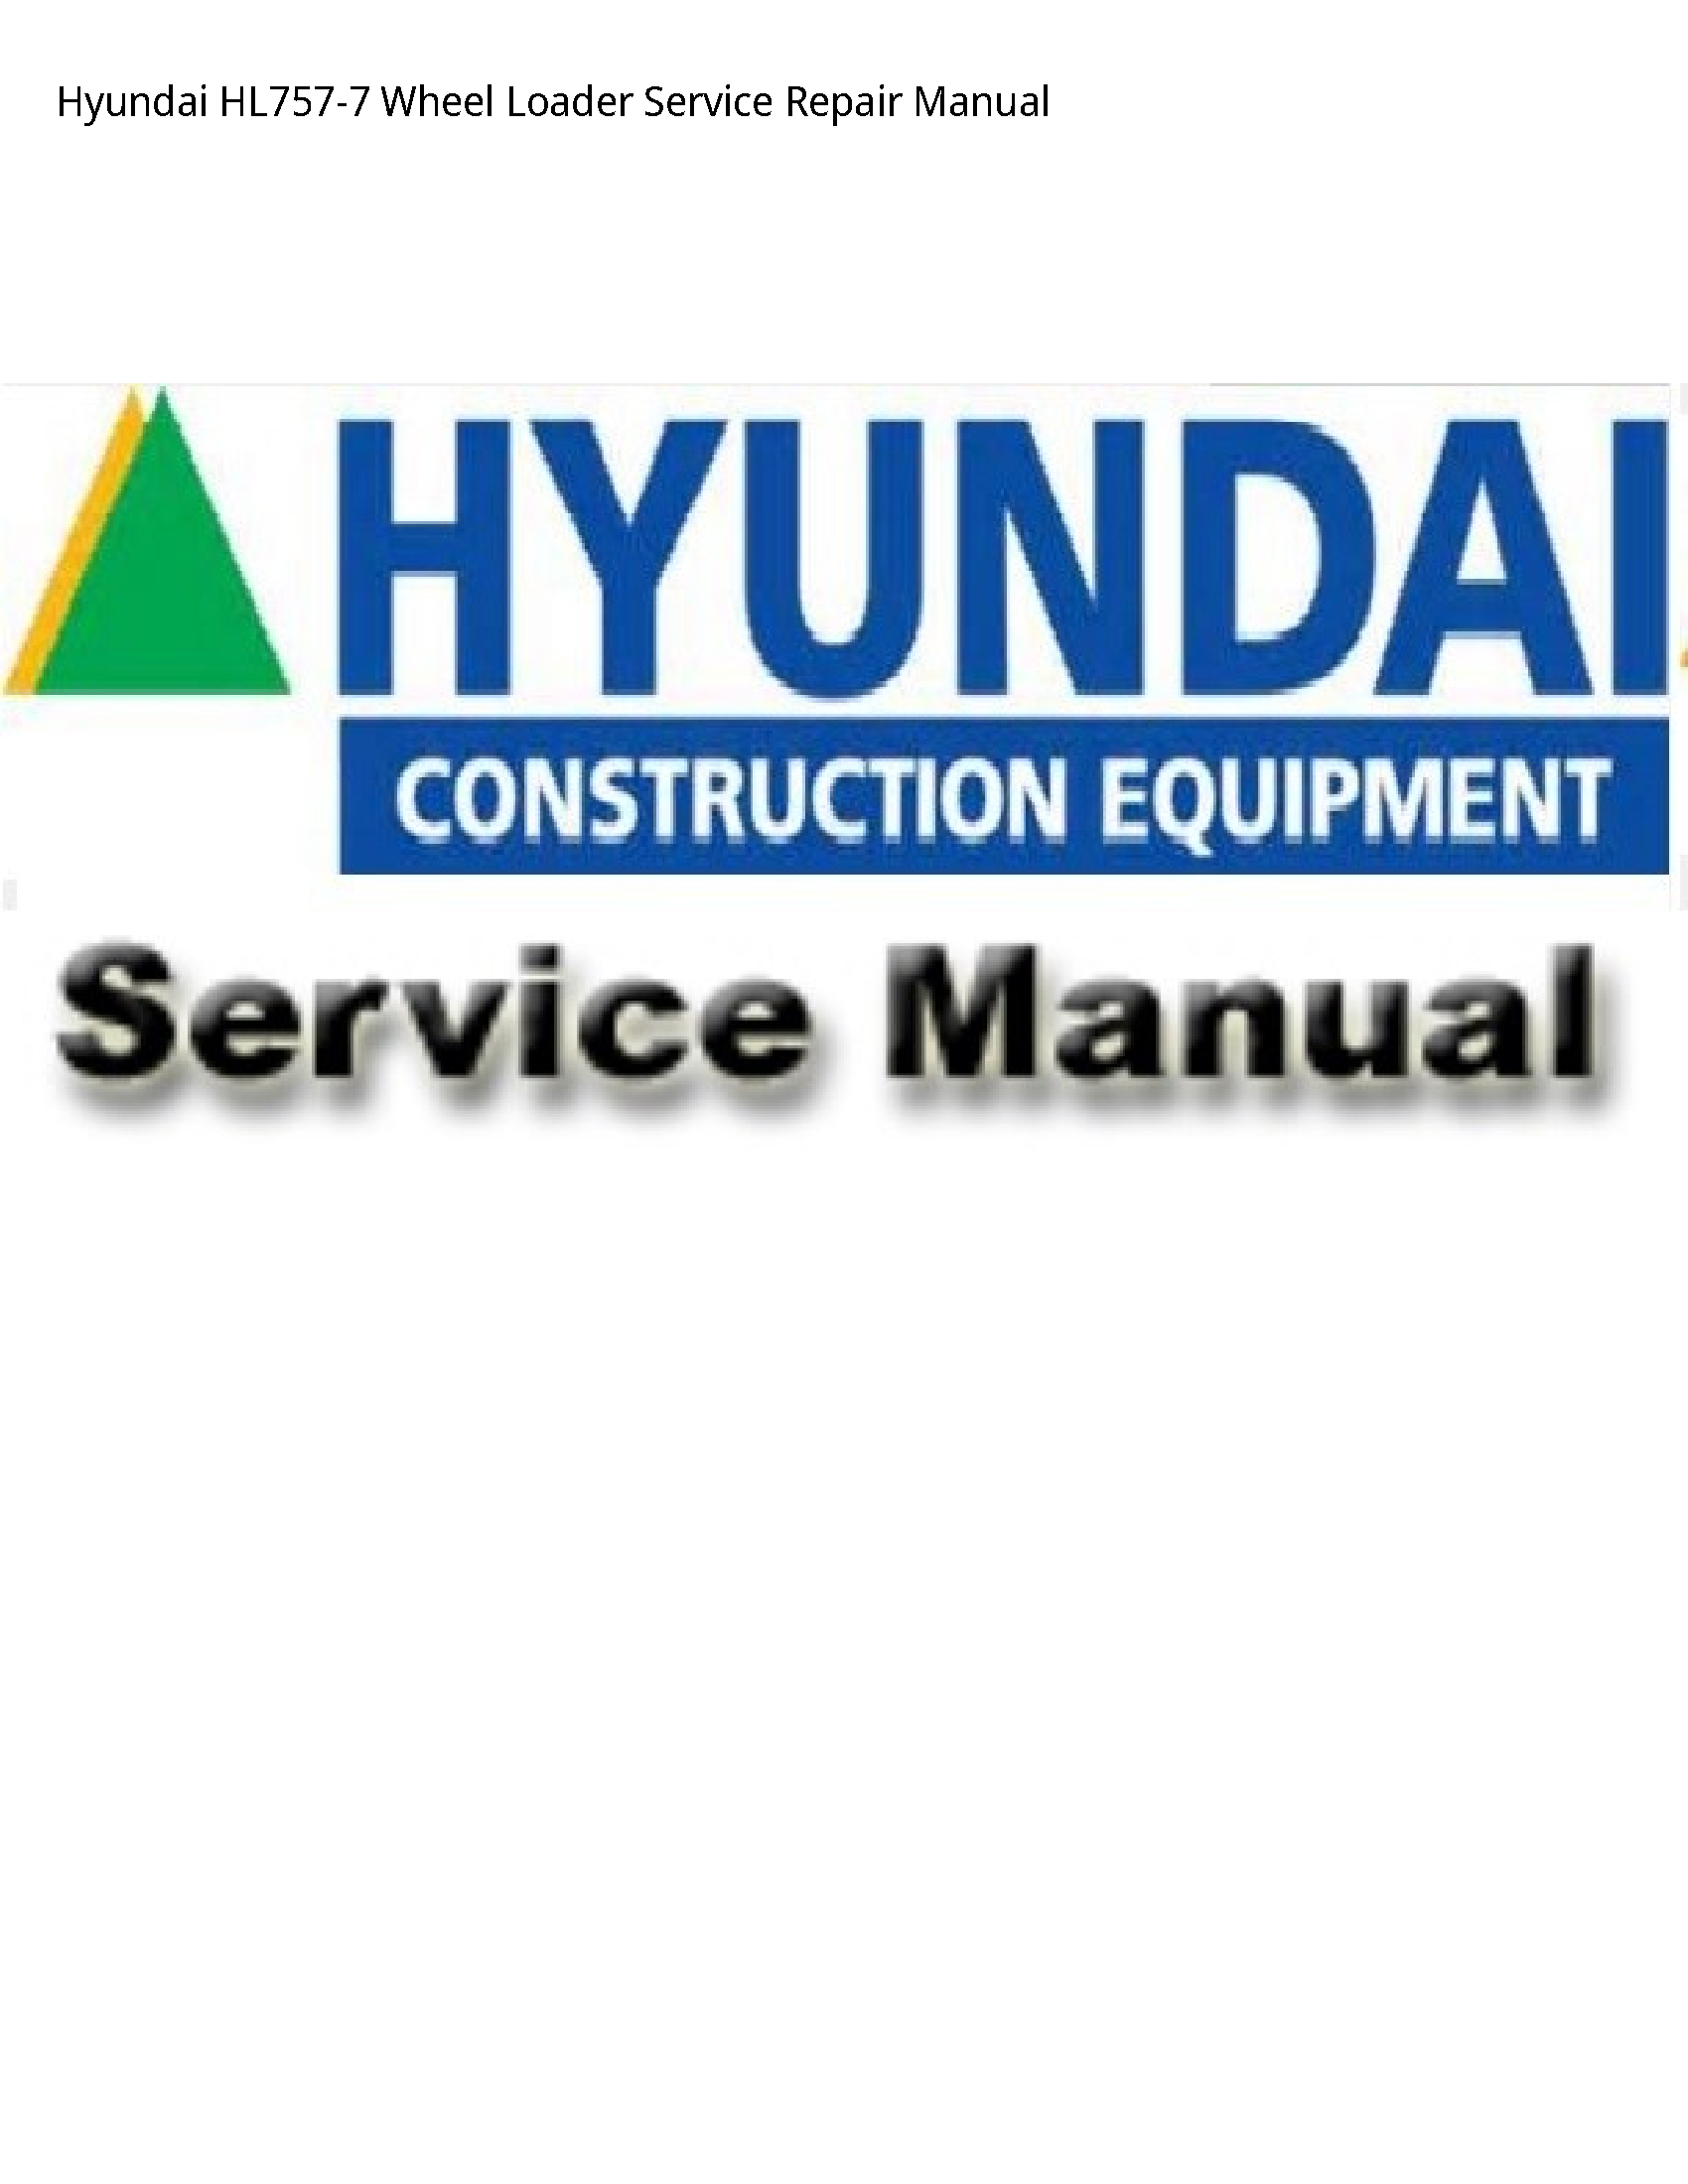 Hyundai HL757-7 Wheel Loader manual